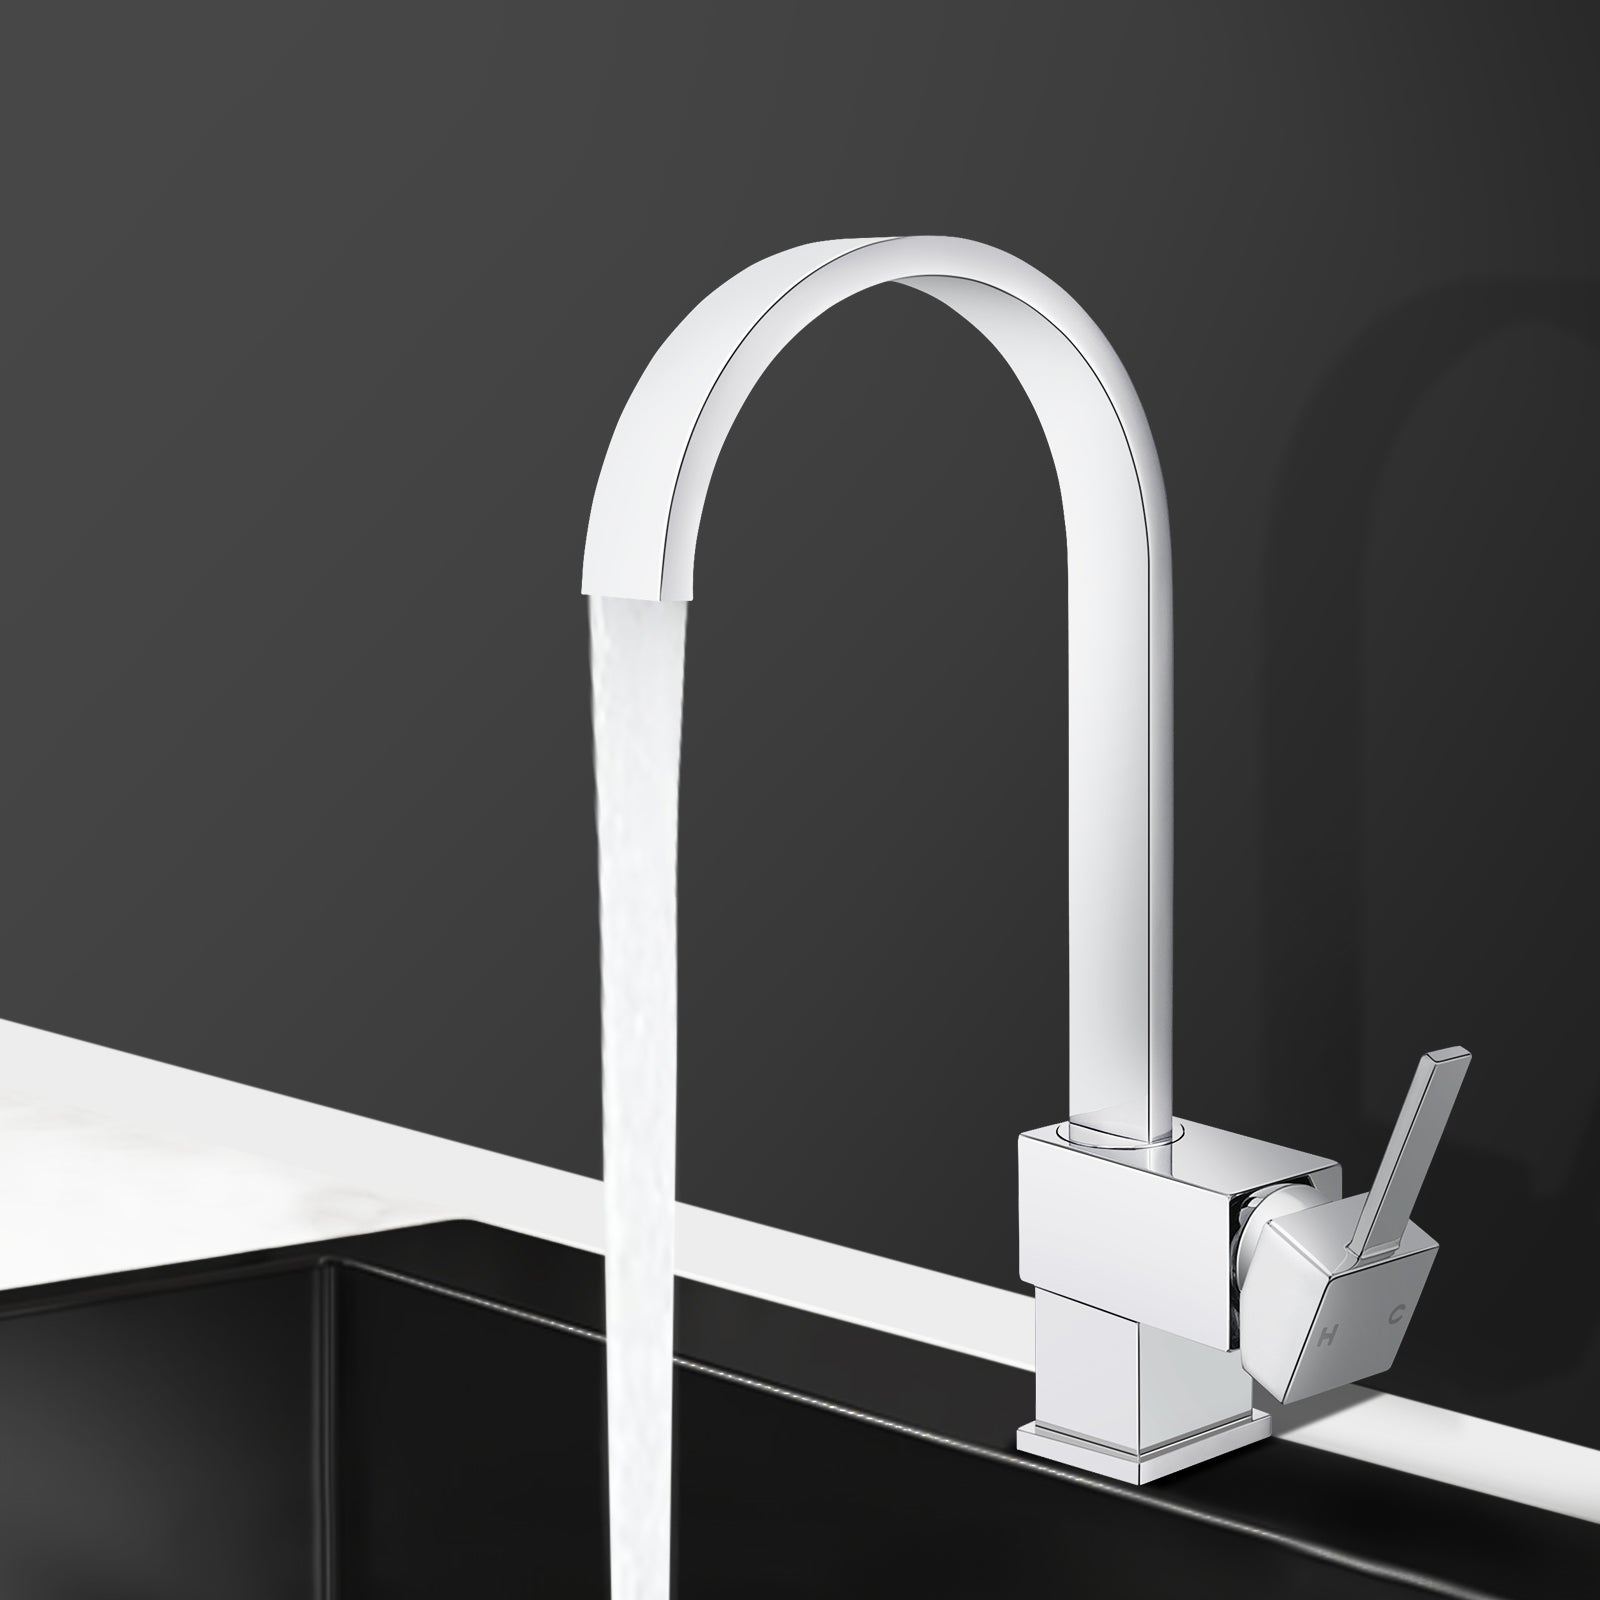 ACA Kitchen Mixer Tap Laundry Sink Brass Chrome 360 degree Swivel Spout Watermark WELS